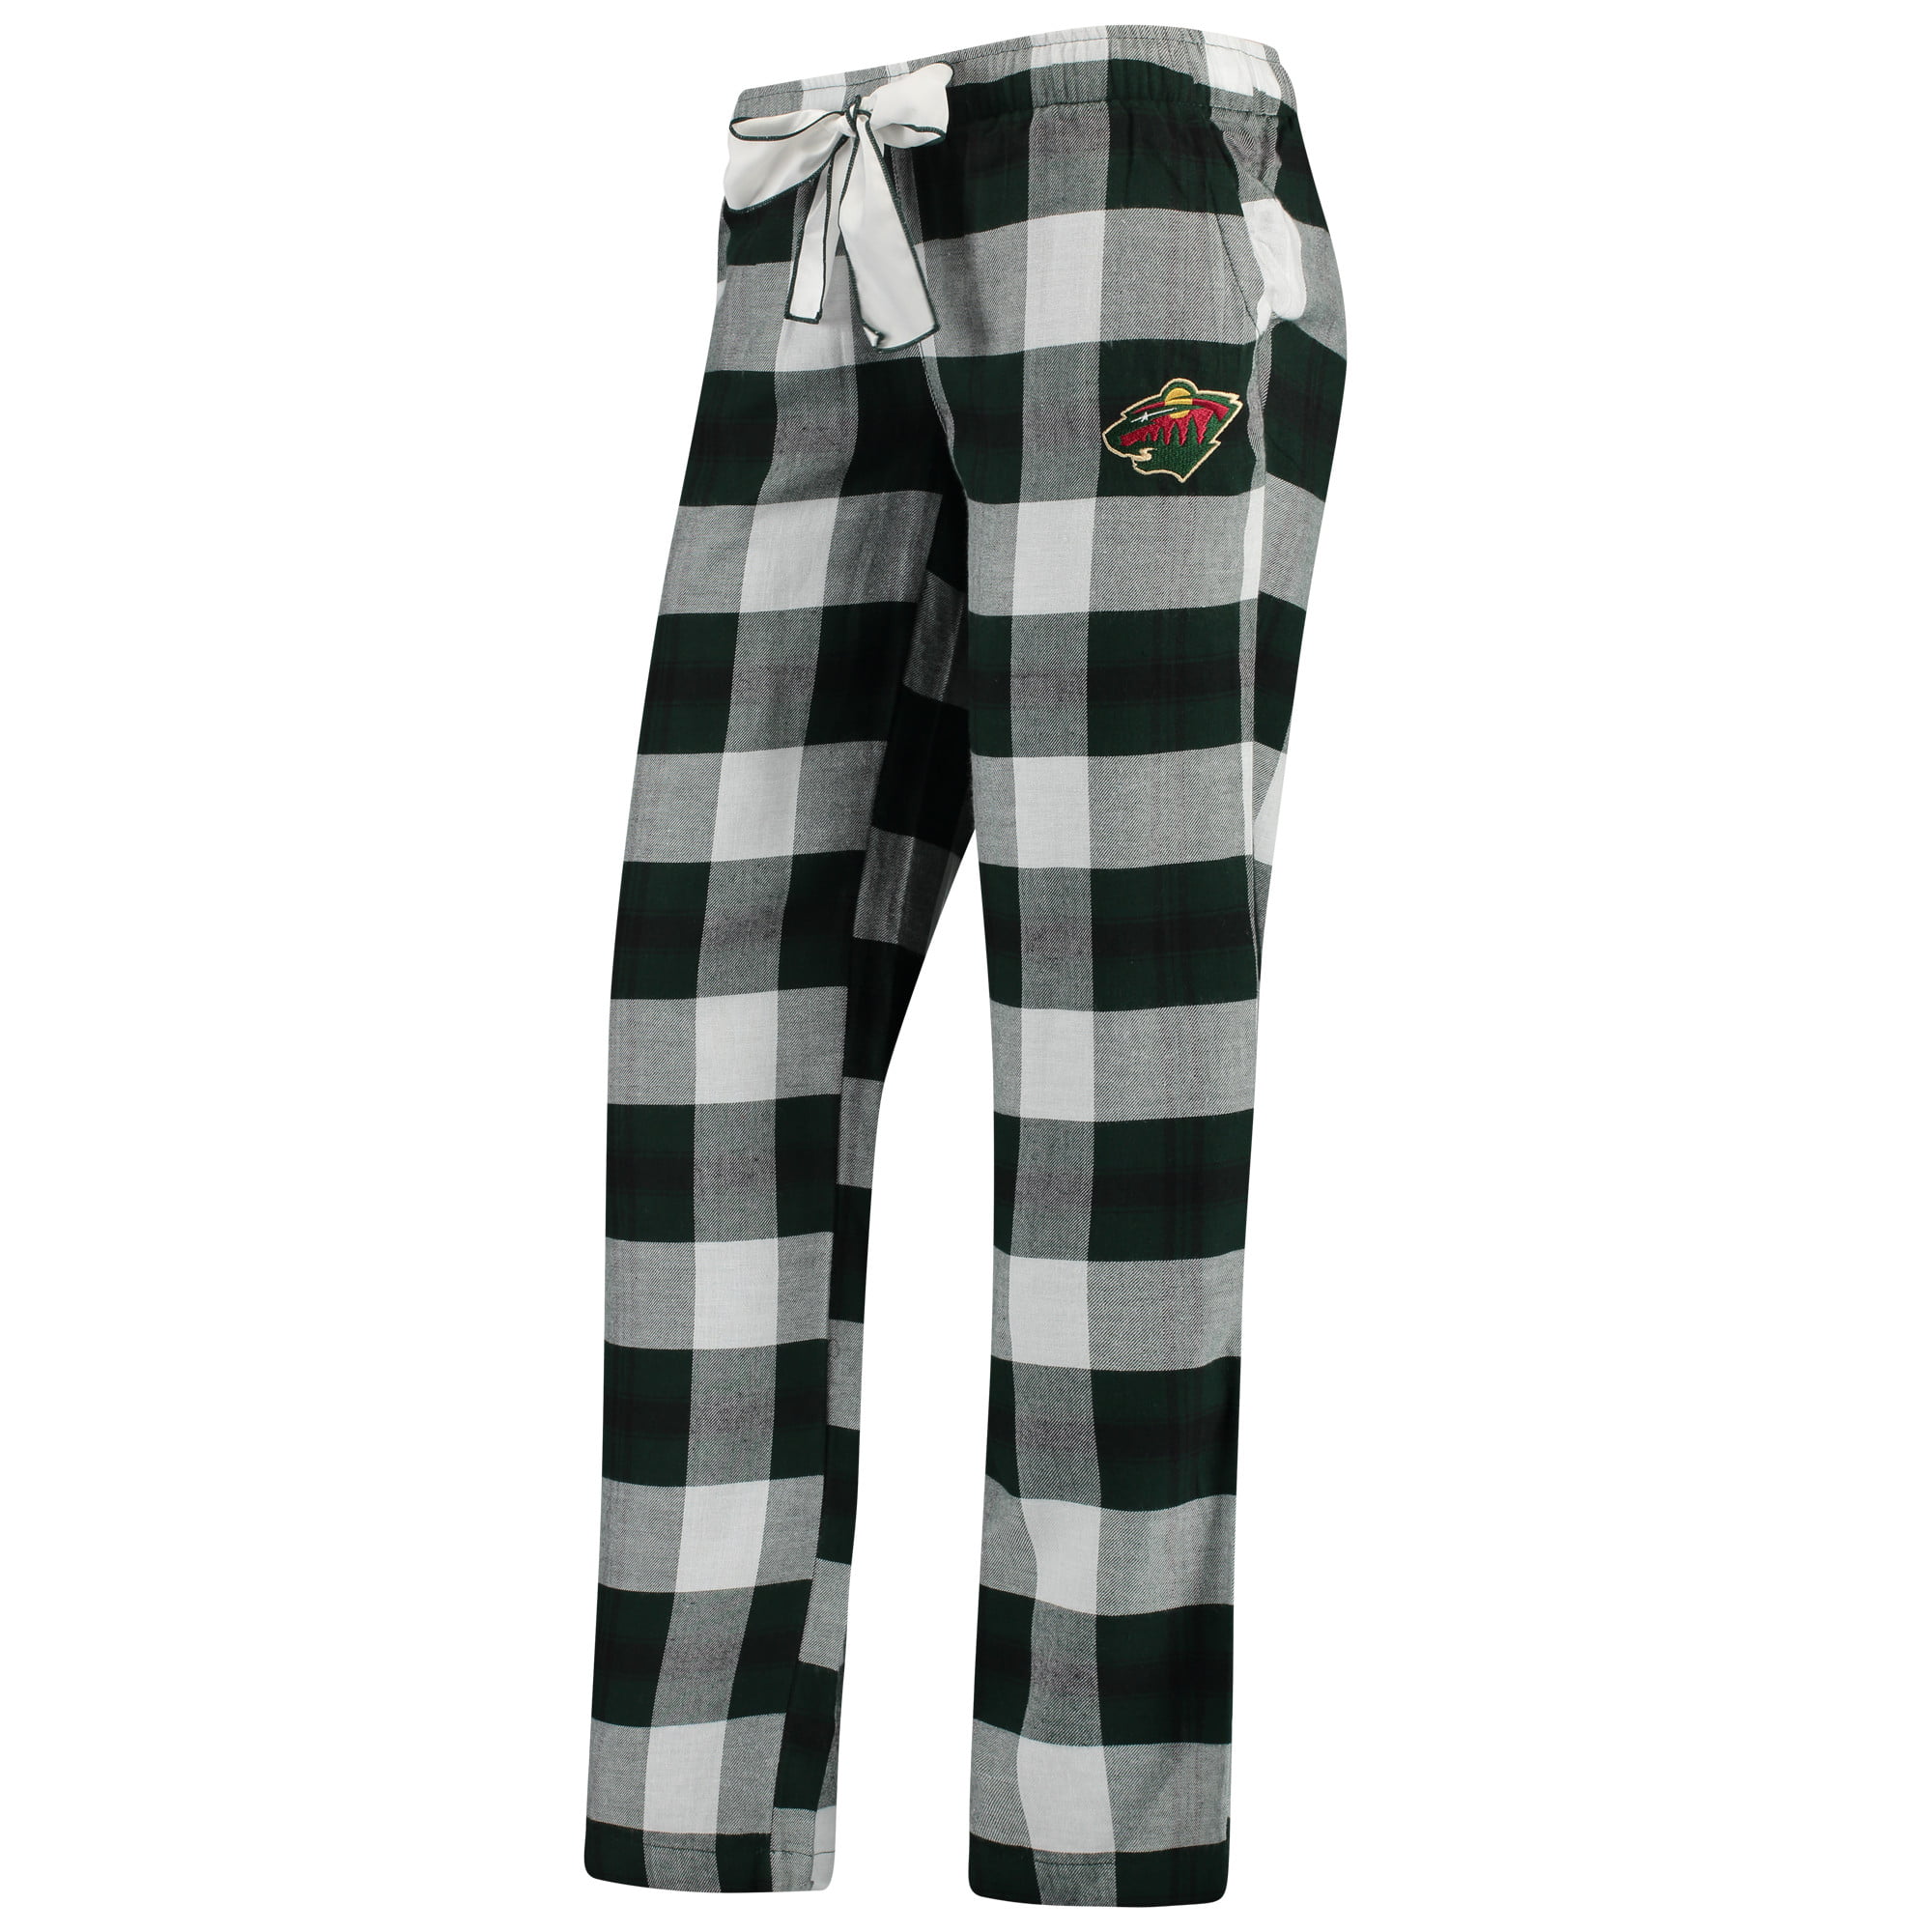 Concepts Sport Los Angeles Clippers LA Mens Pajama Pants Plaid Pajama Bottoms